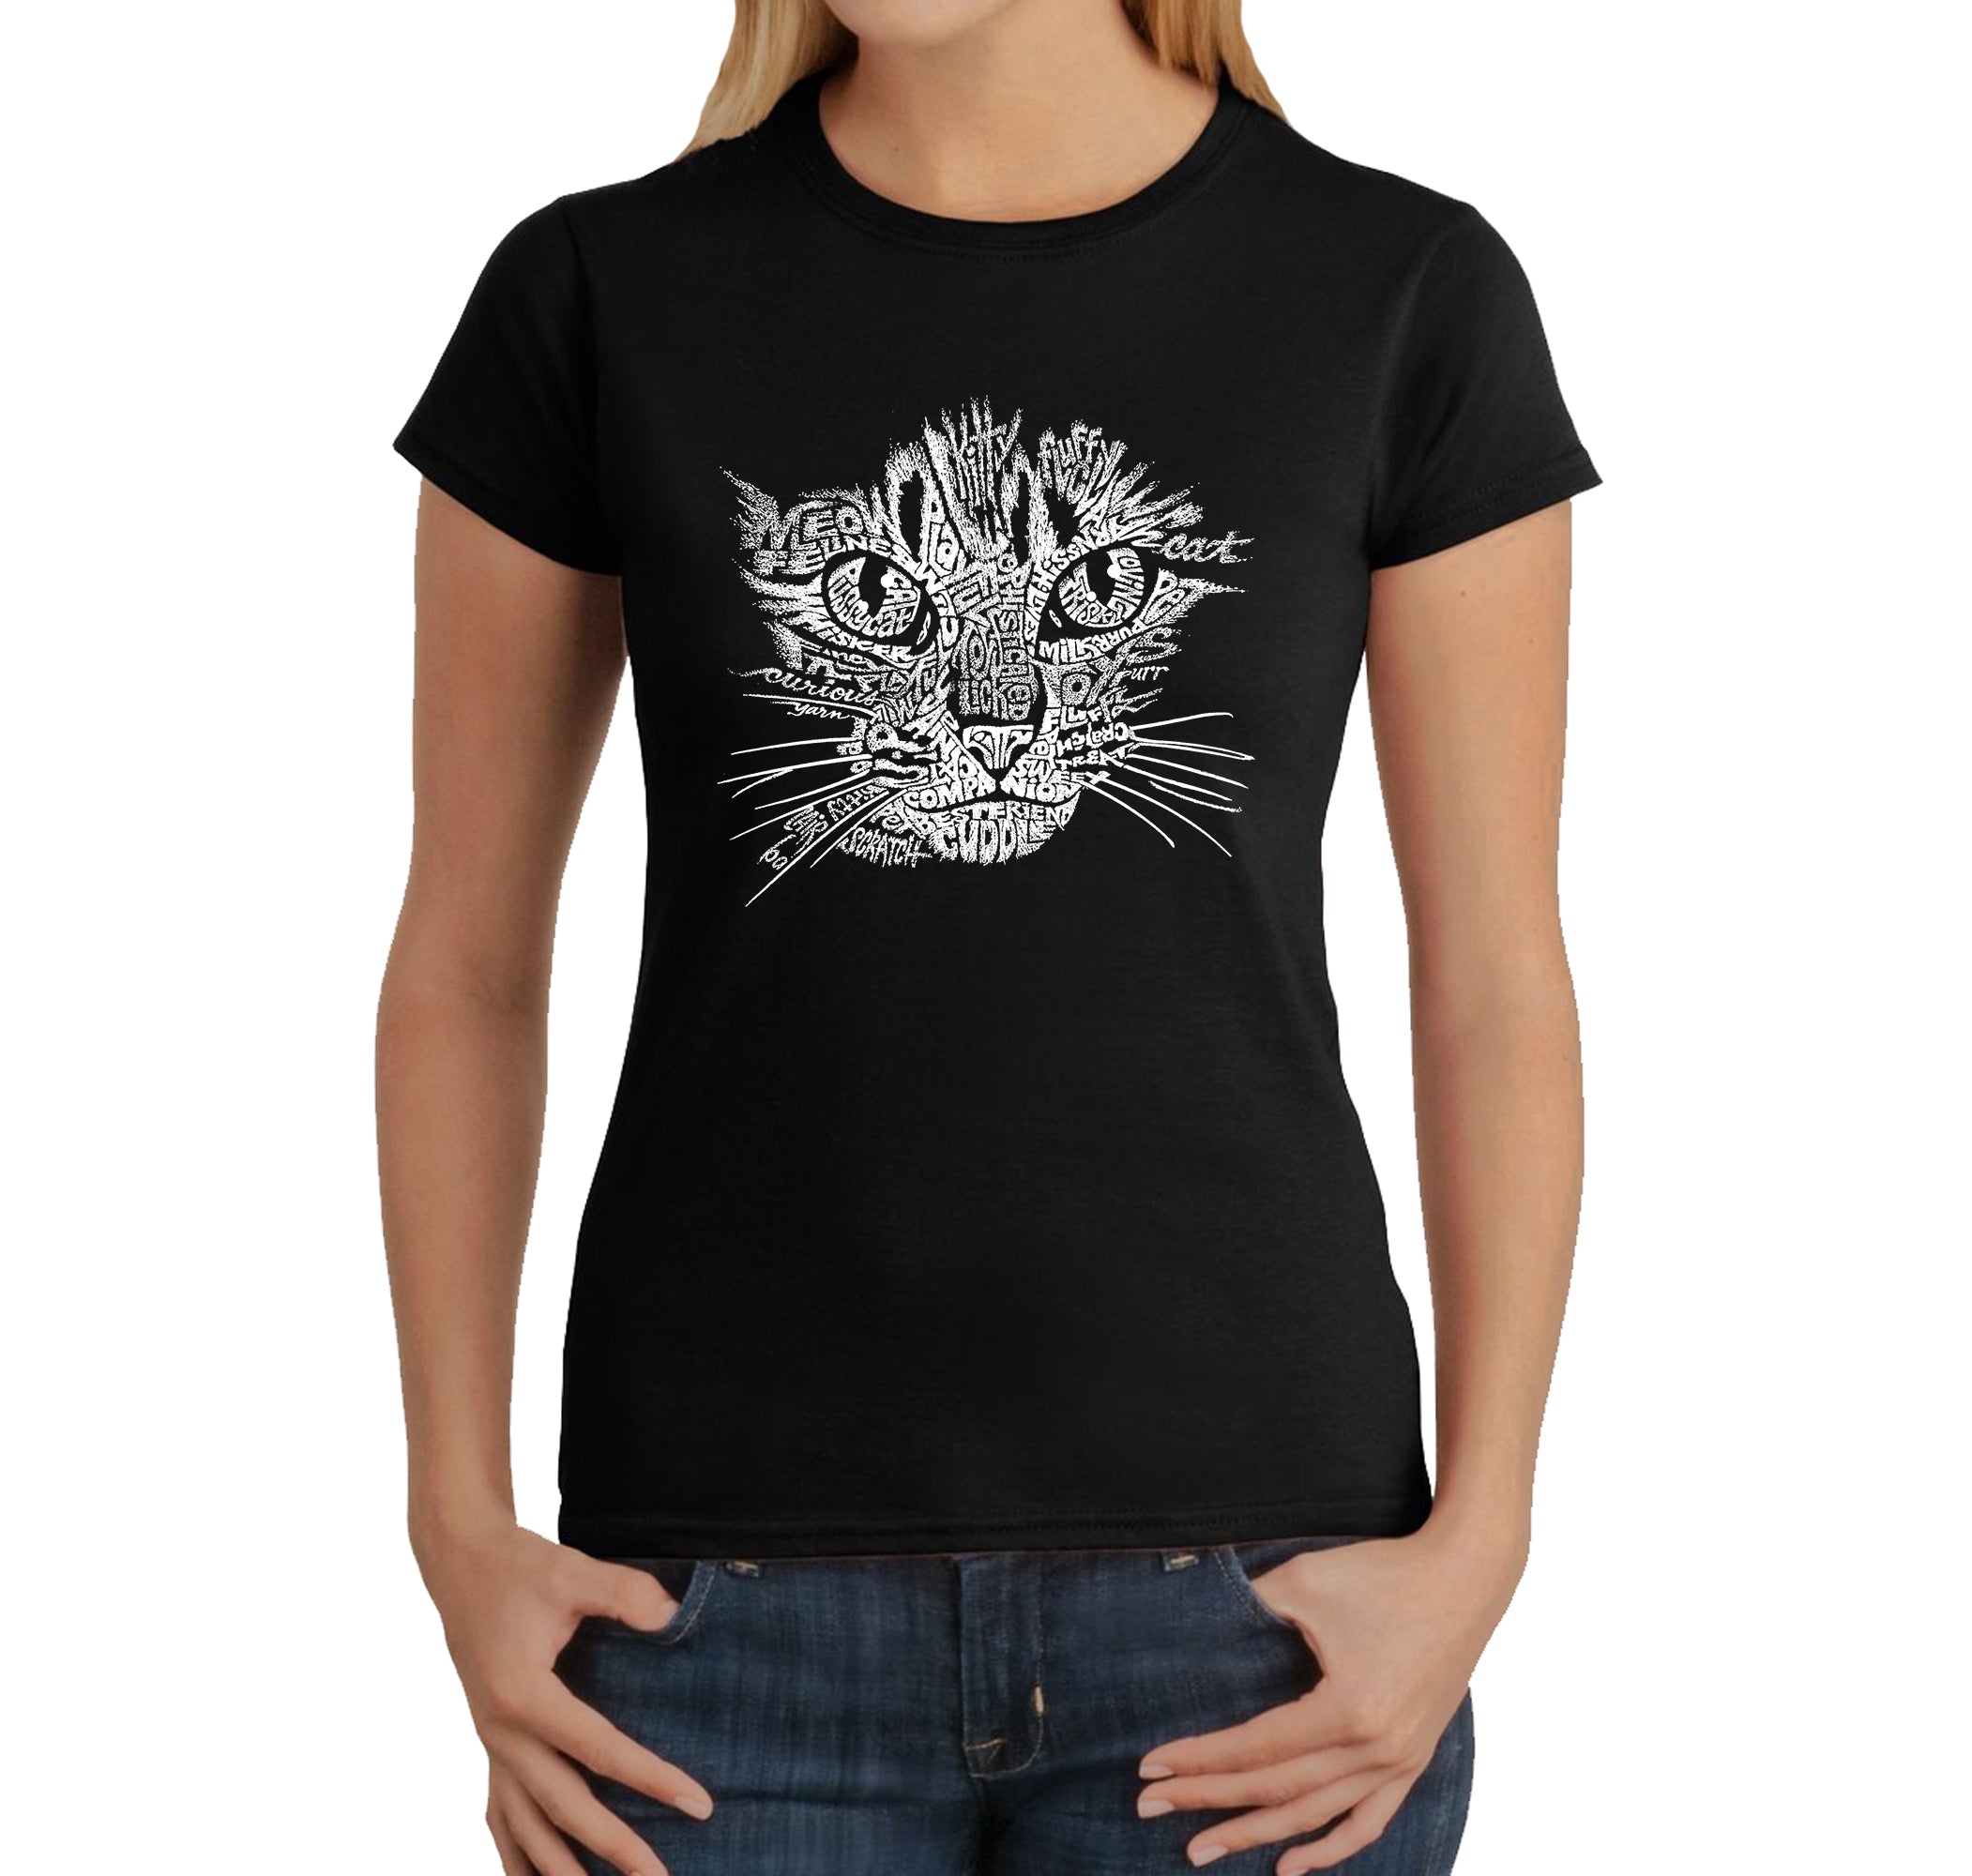 Cat Face - Women's Word Art T-Shirt - Black - Large